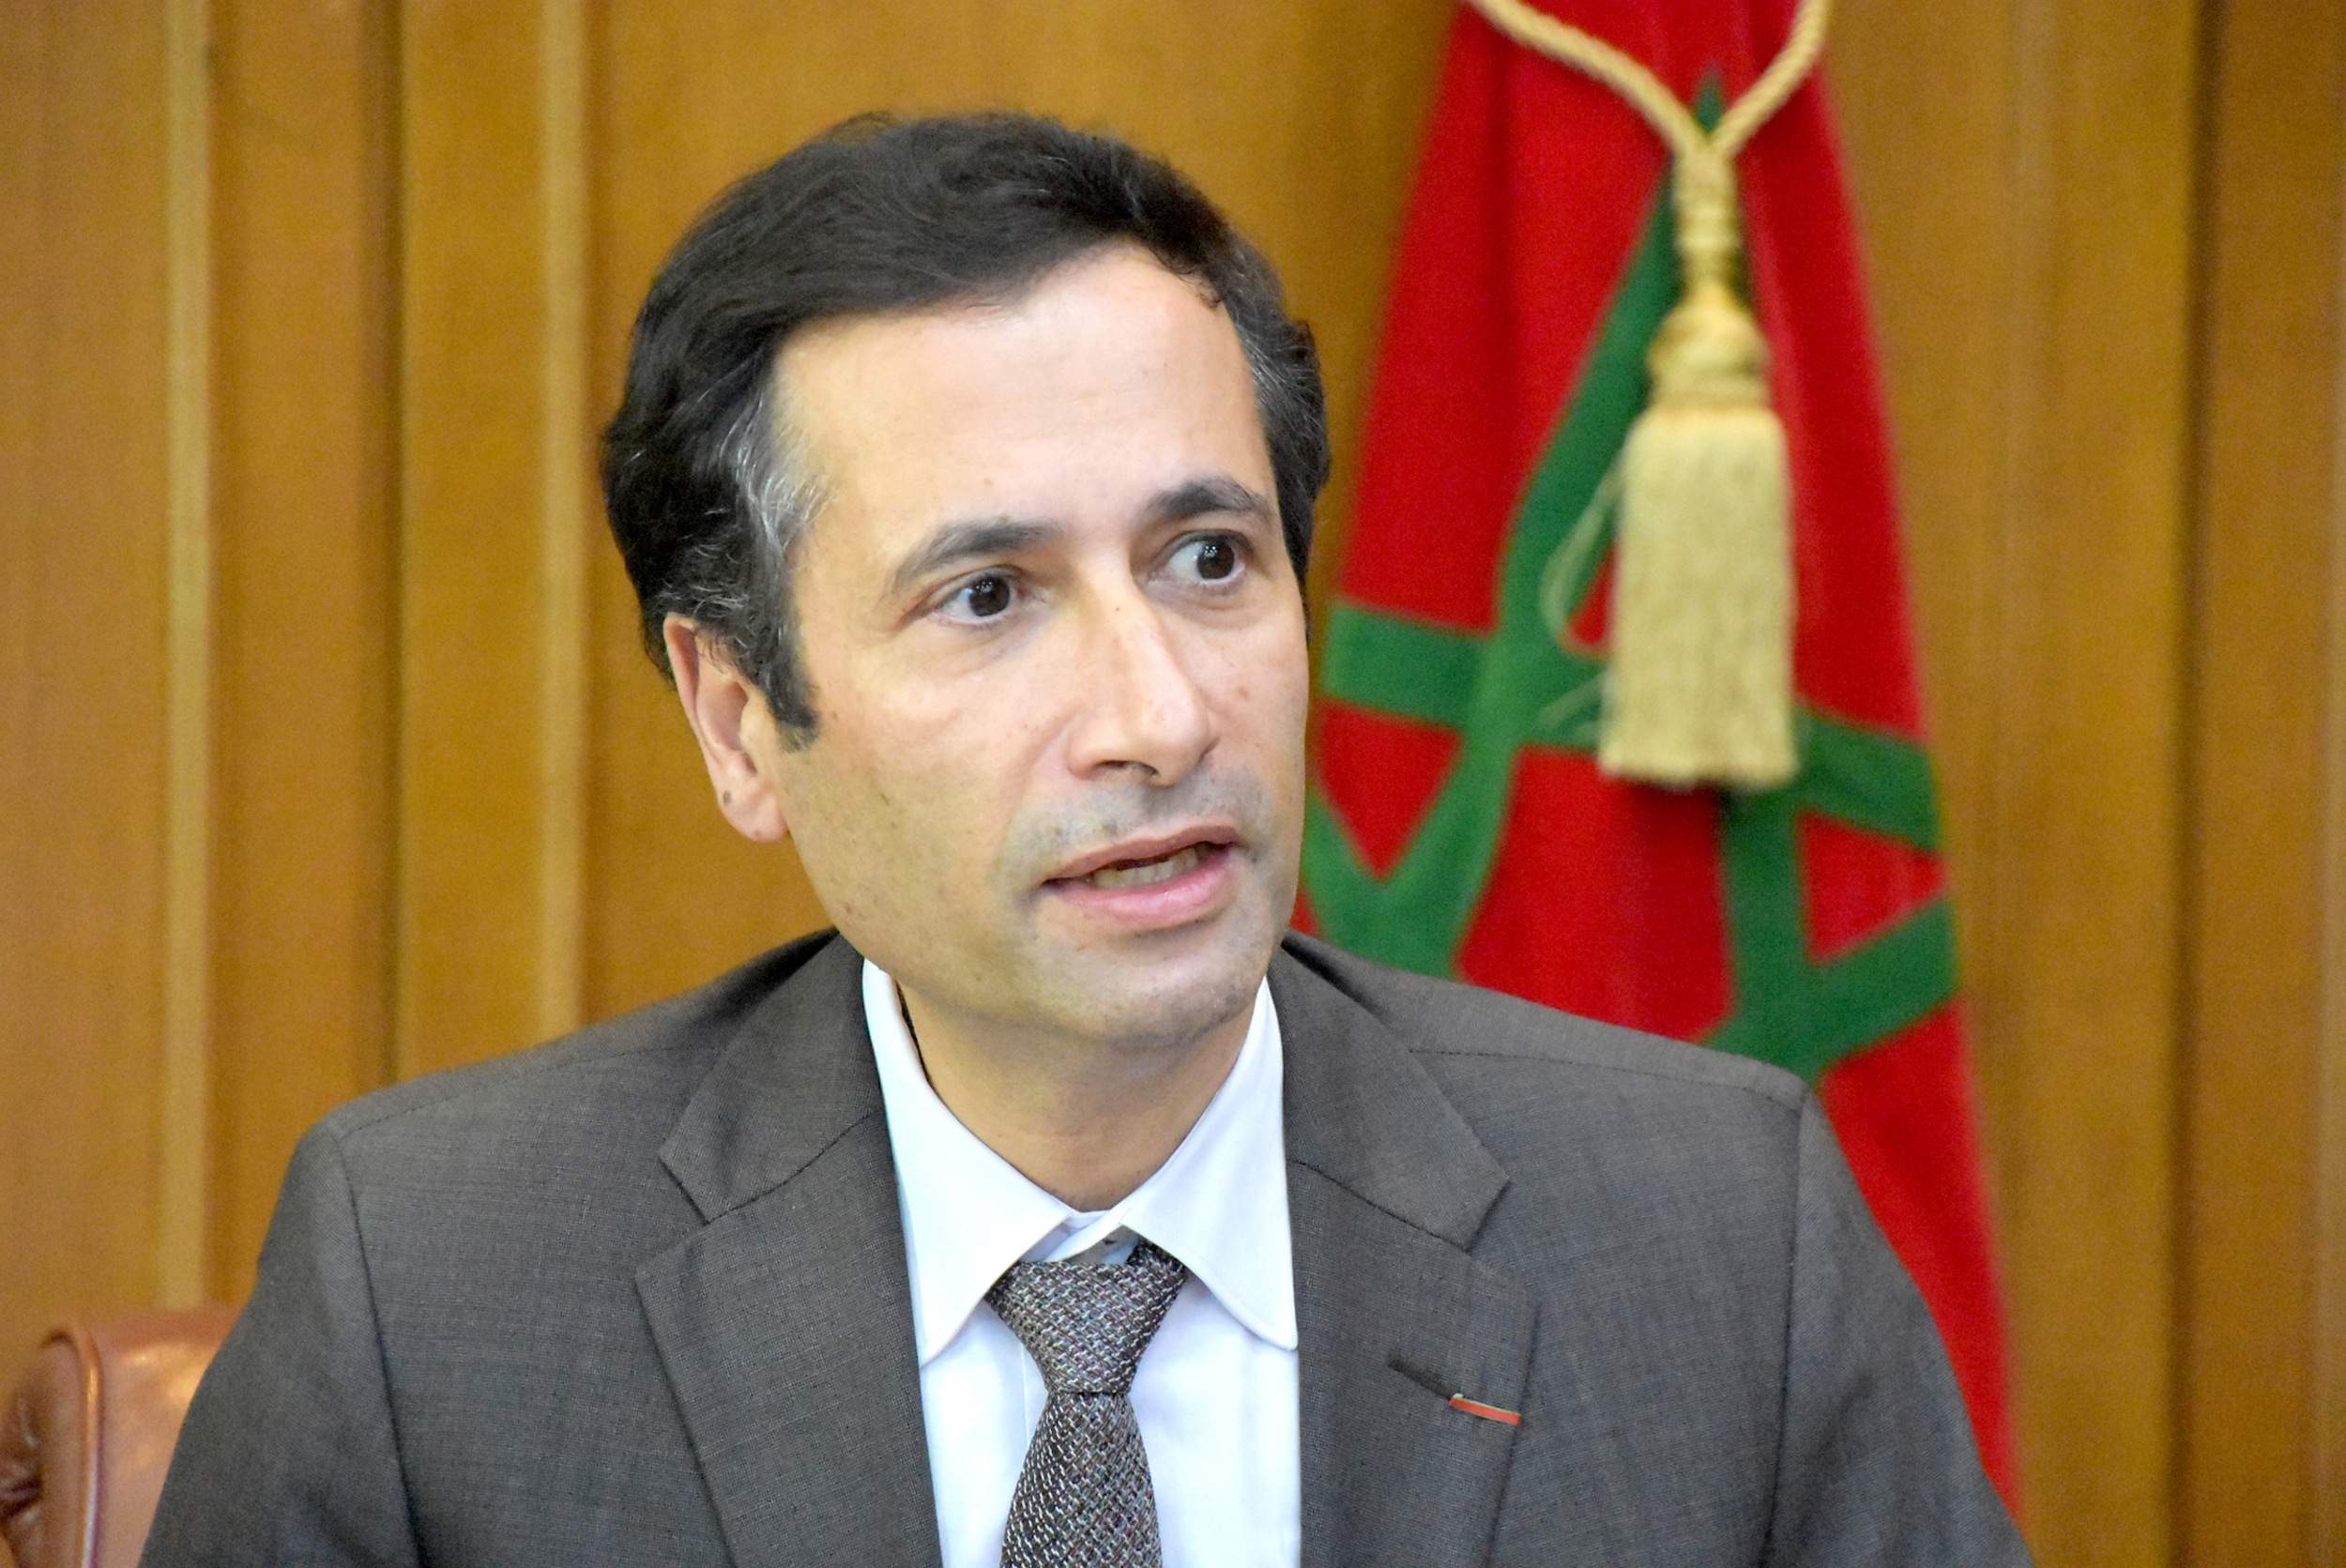 Morocco appoints new ambassadors to France, EU